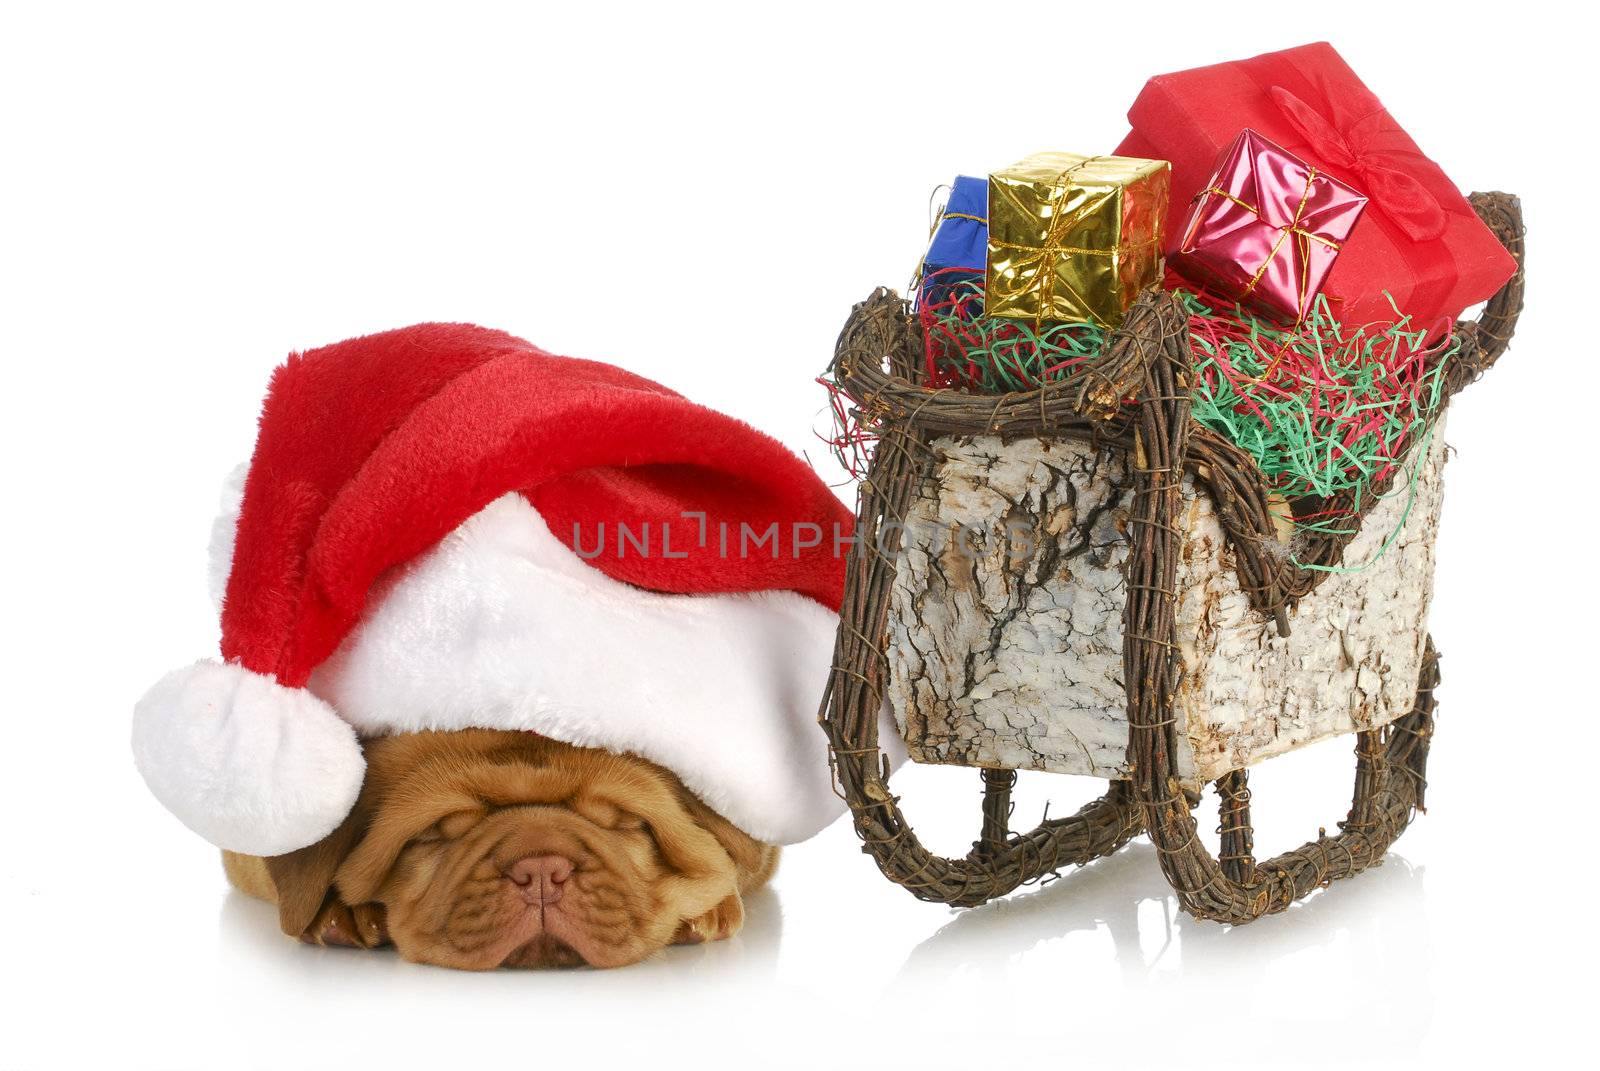 santa's sleigh - dogue de bordeaux puppy santa laying beside sleigh full of presents